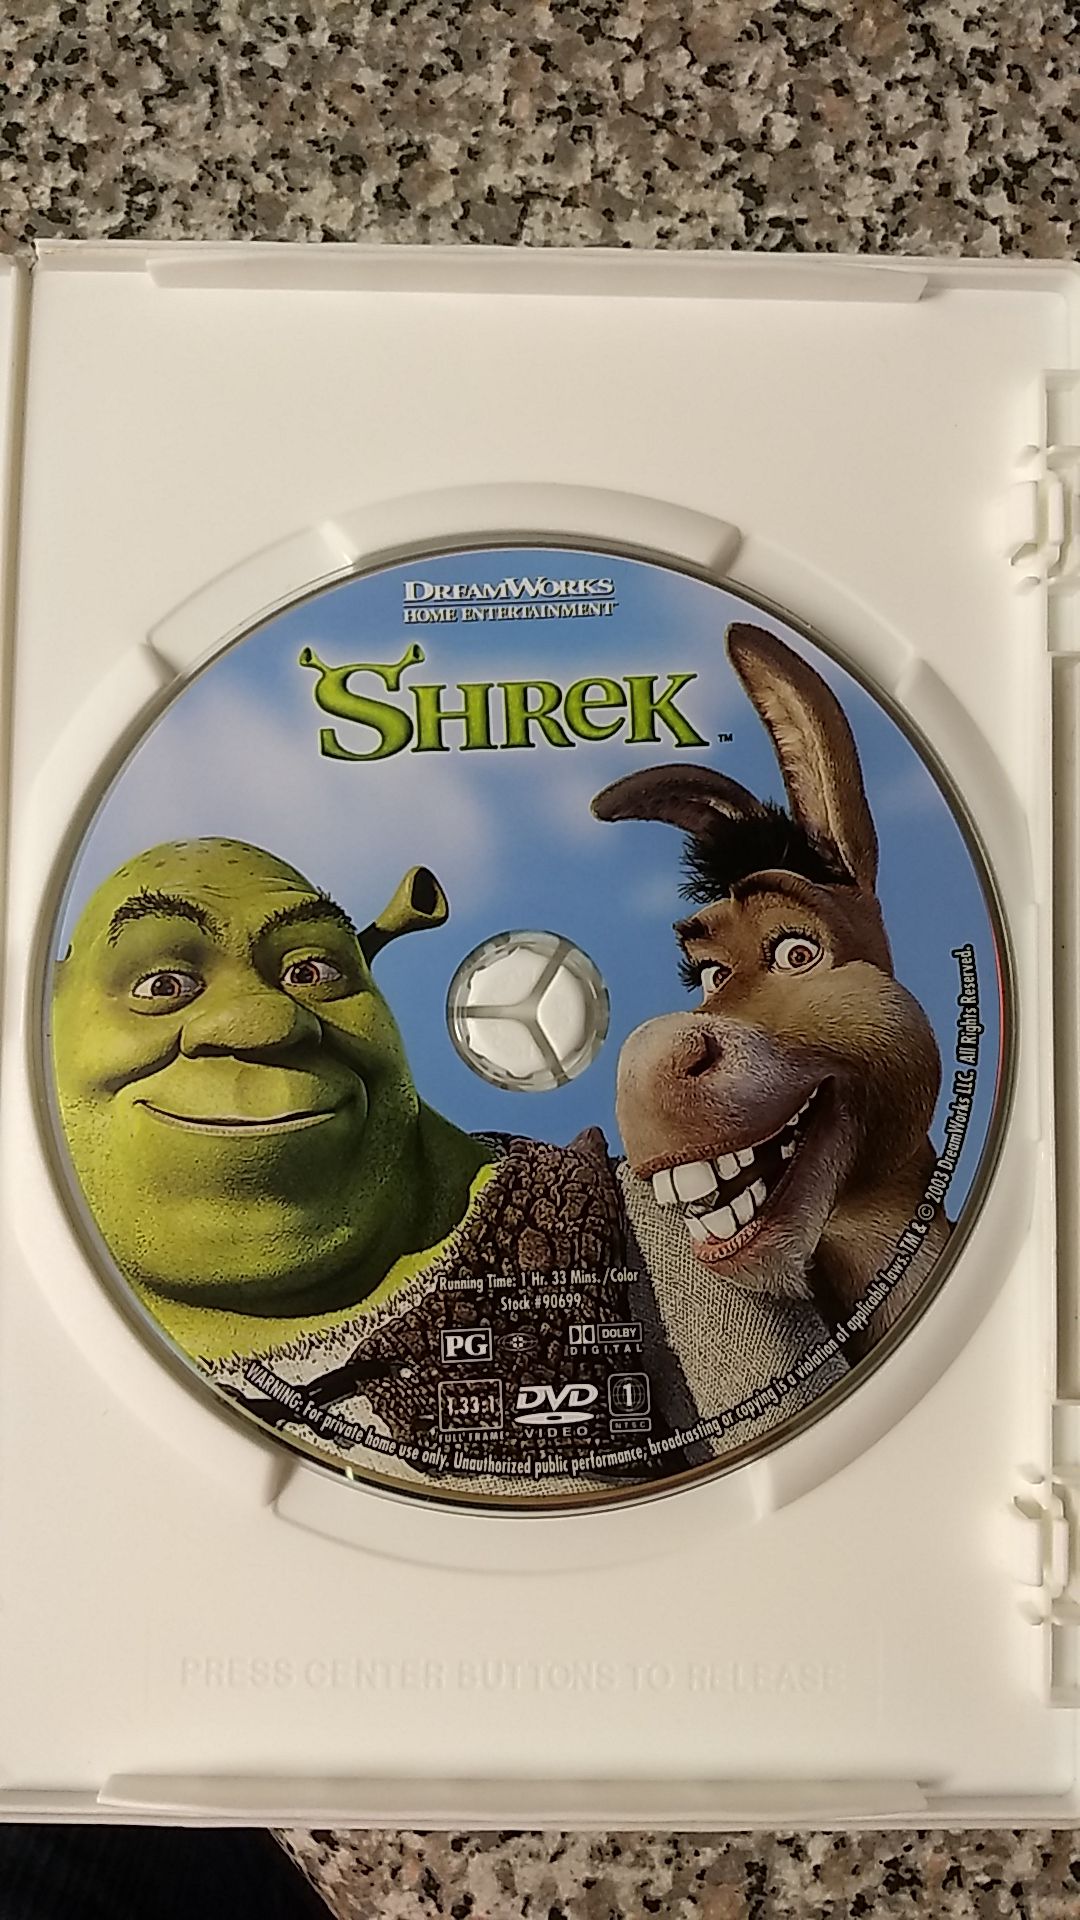 Shrek 1 and 2 DVDs